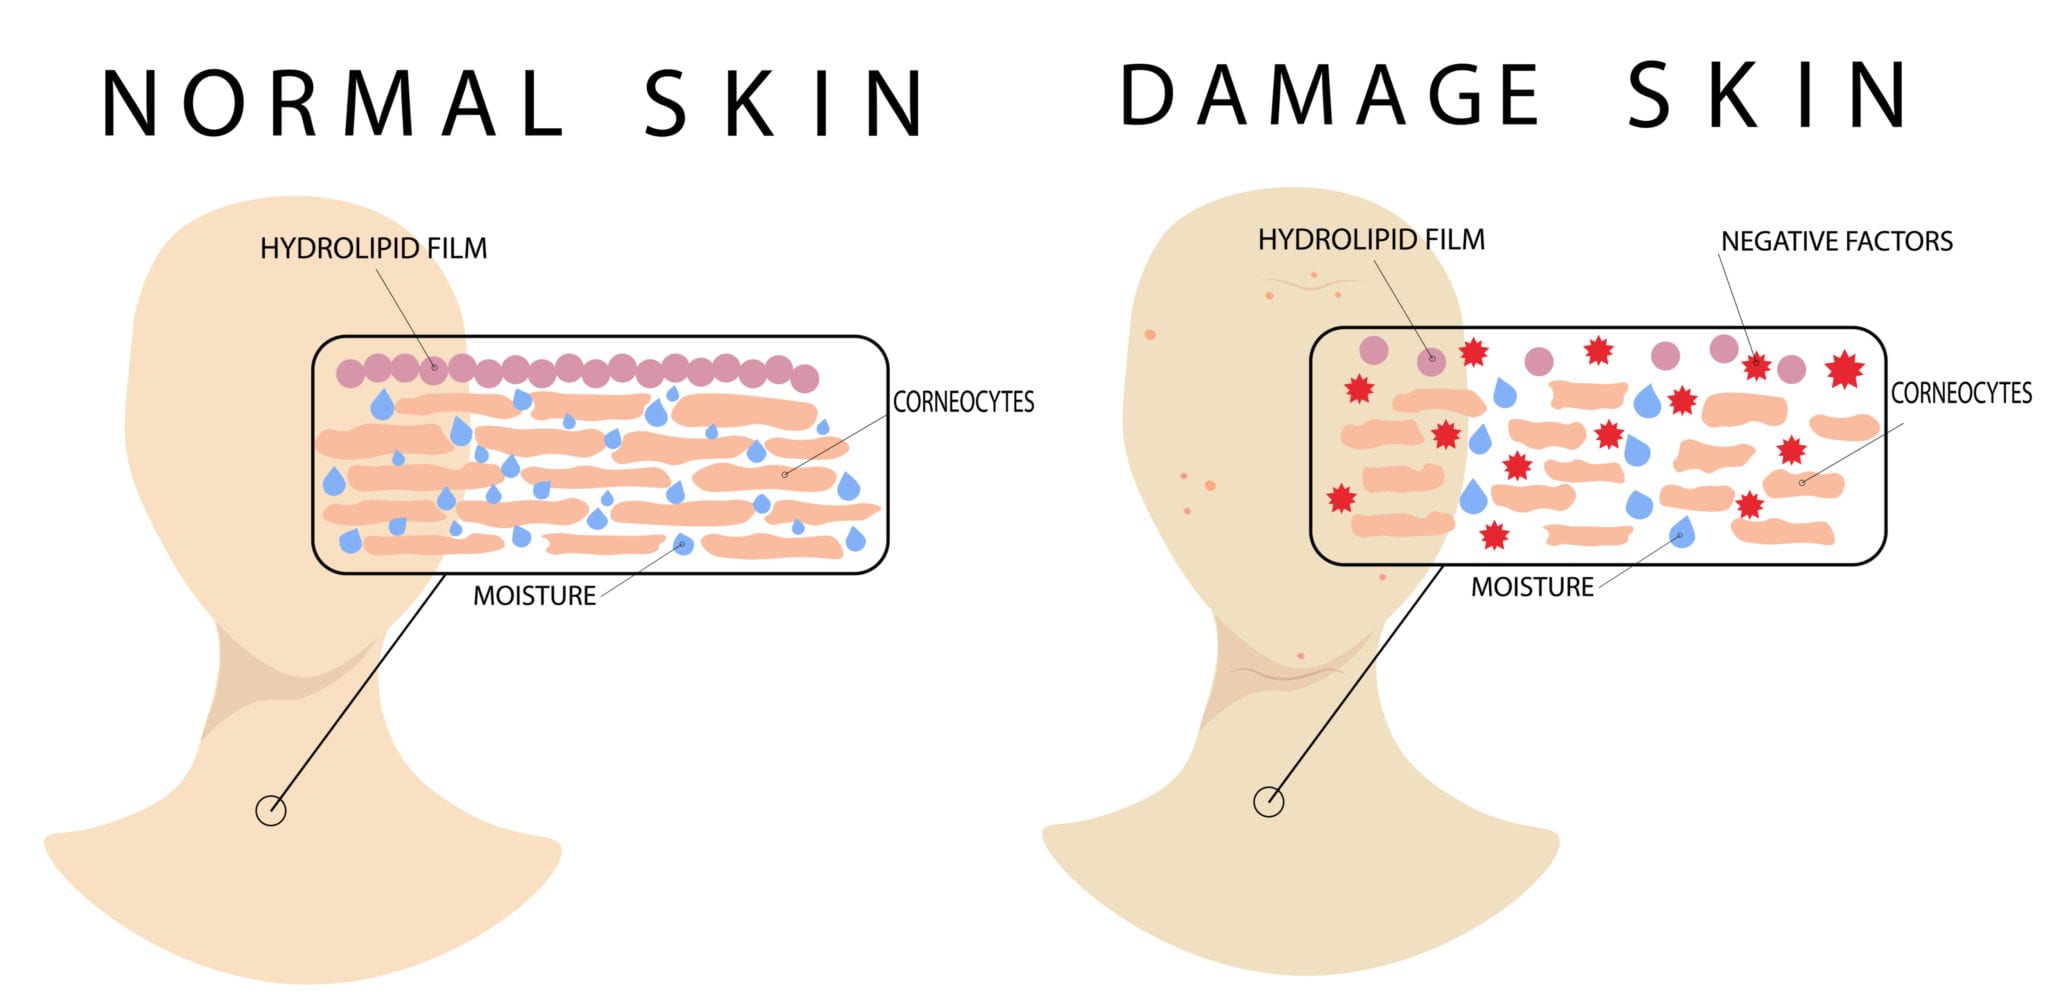 skin barrier